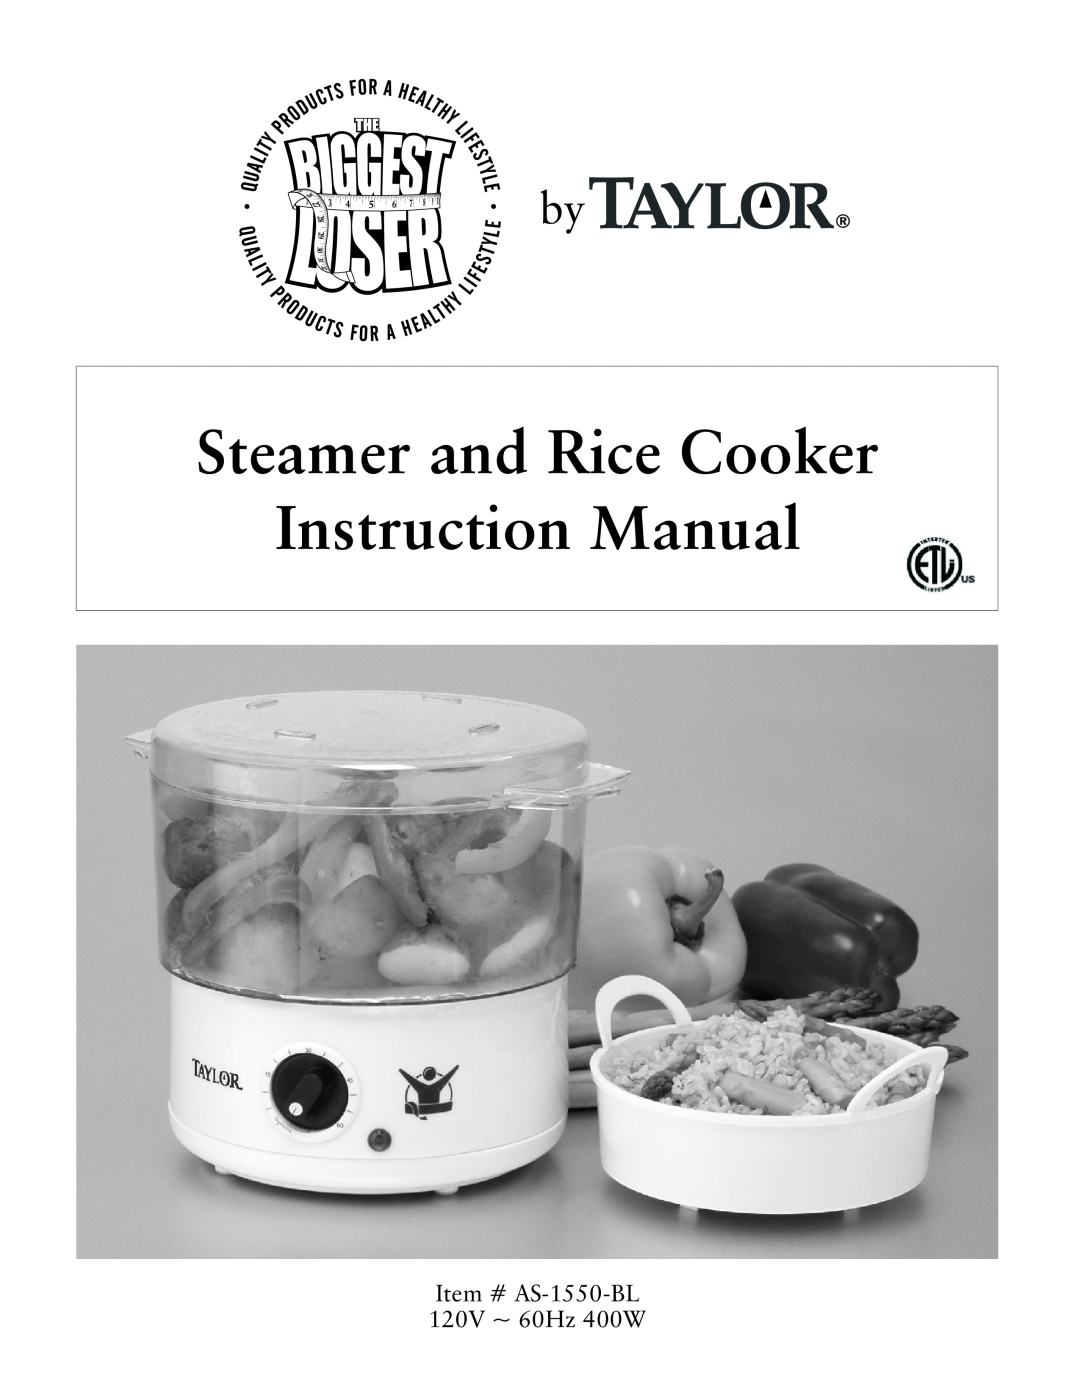 Taylor instruction manual Item # AS-1550-BL120V ~ 60Hz 400W 